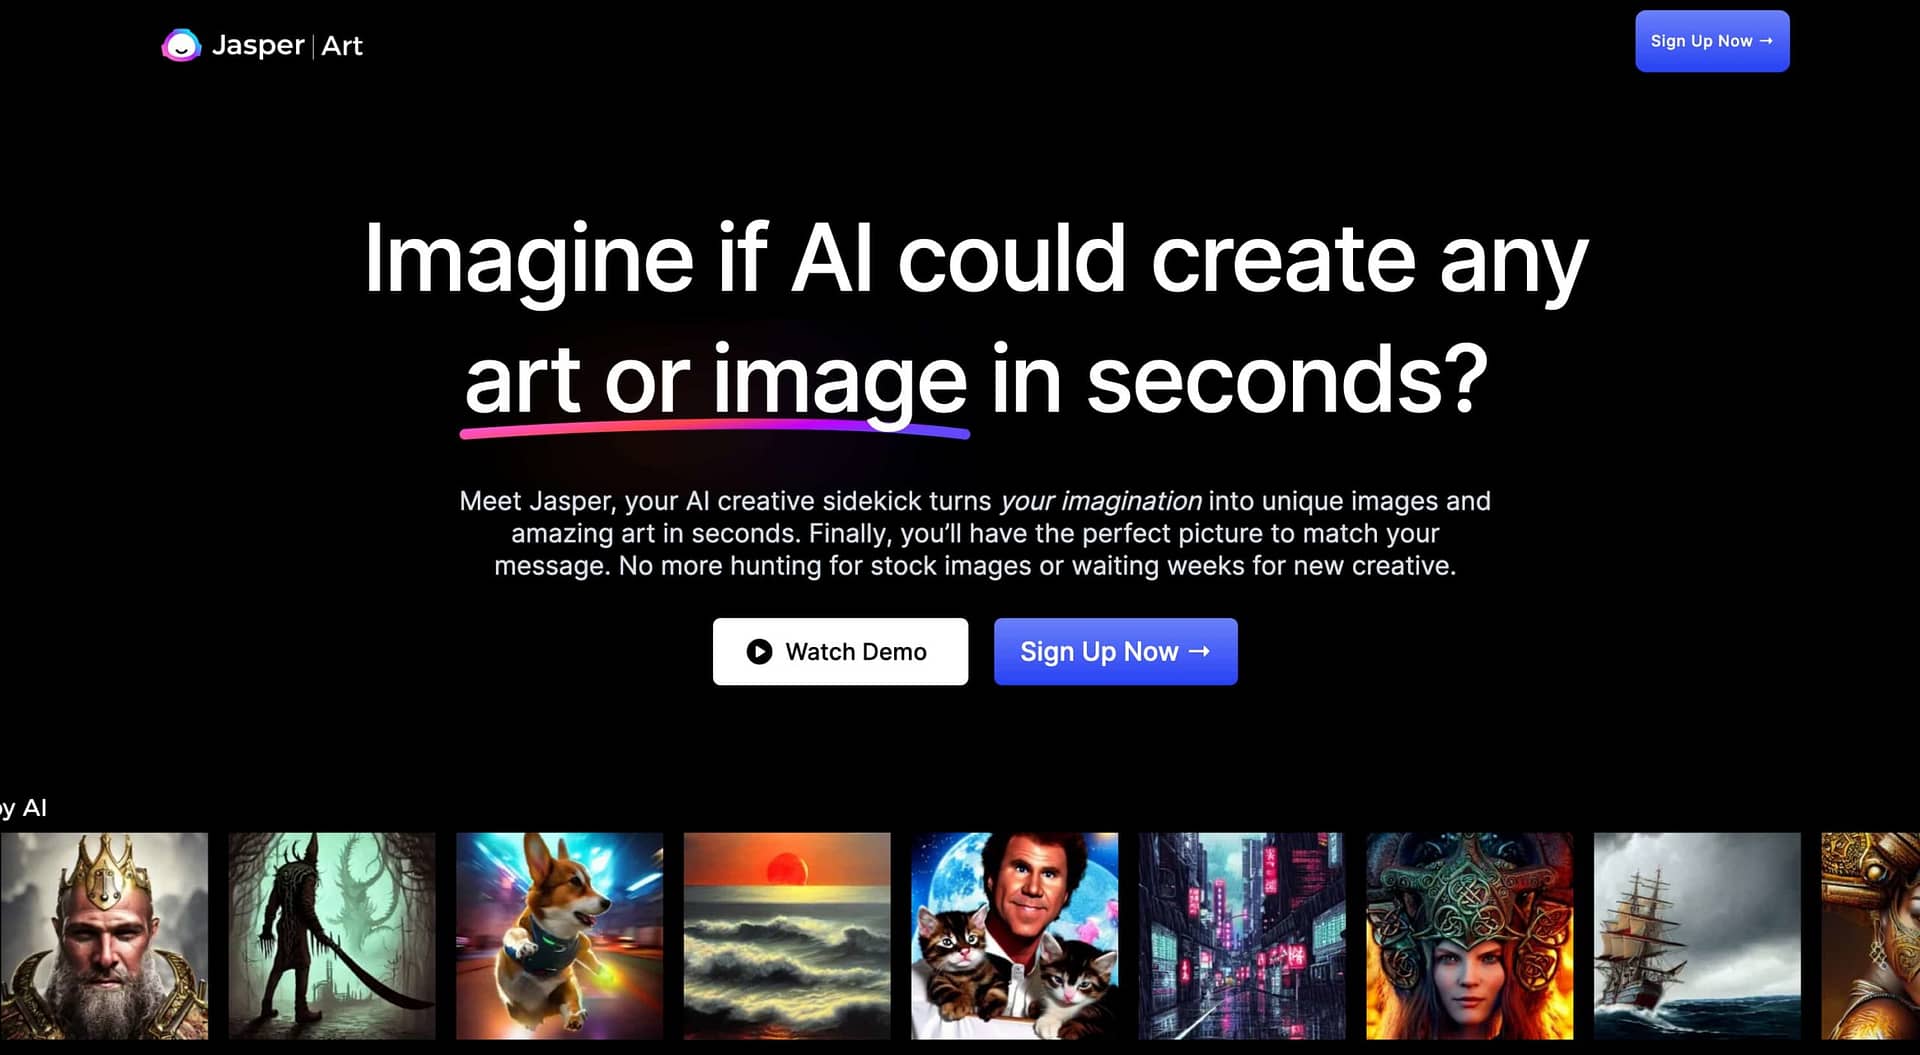 Jasper Art Review – A DALL-E 2 AI Image Generator